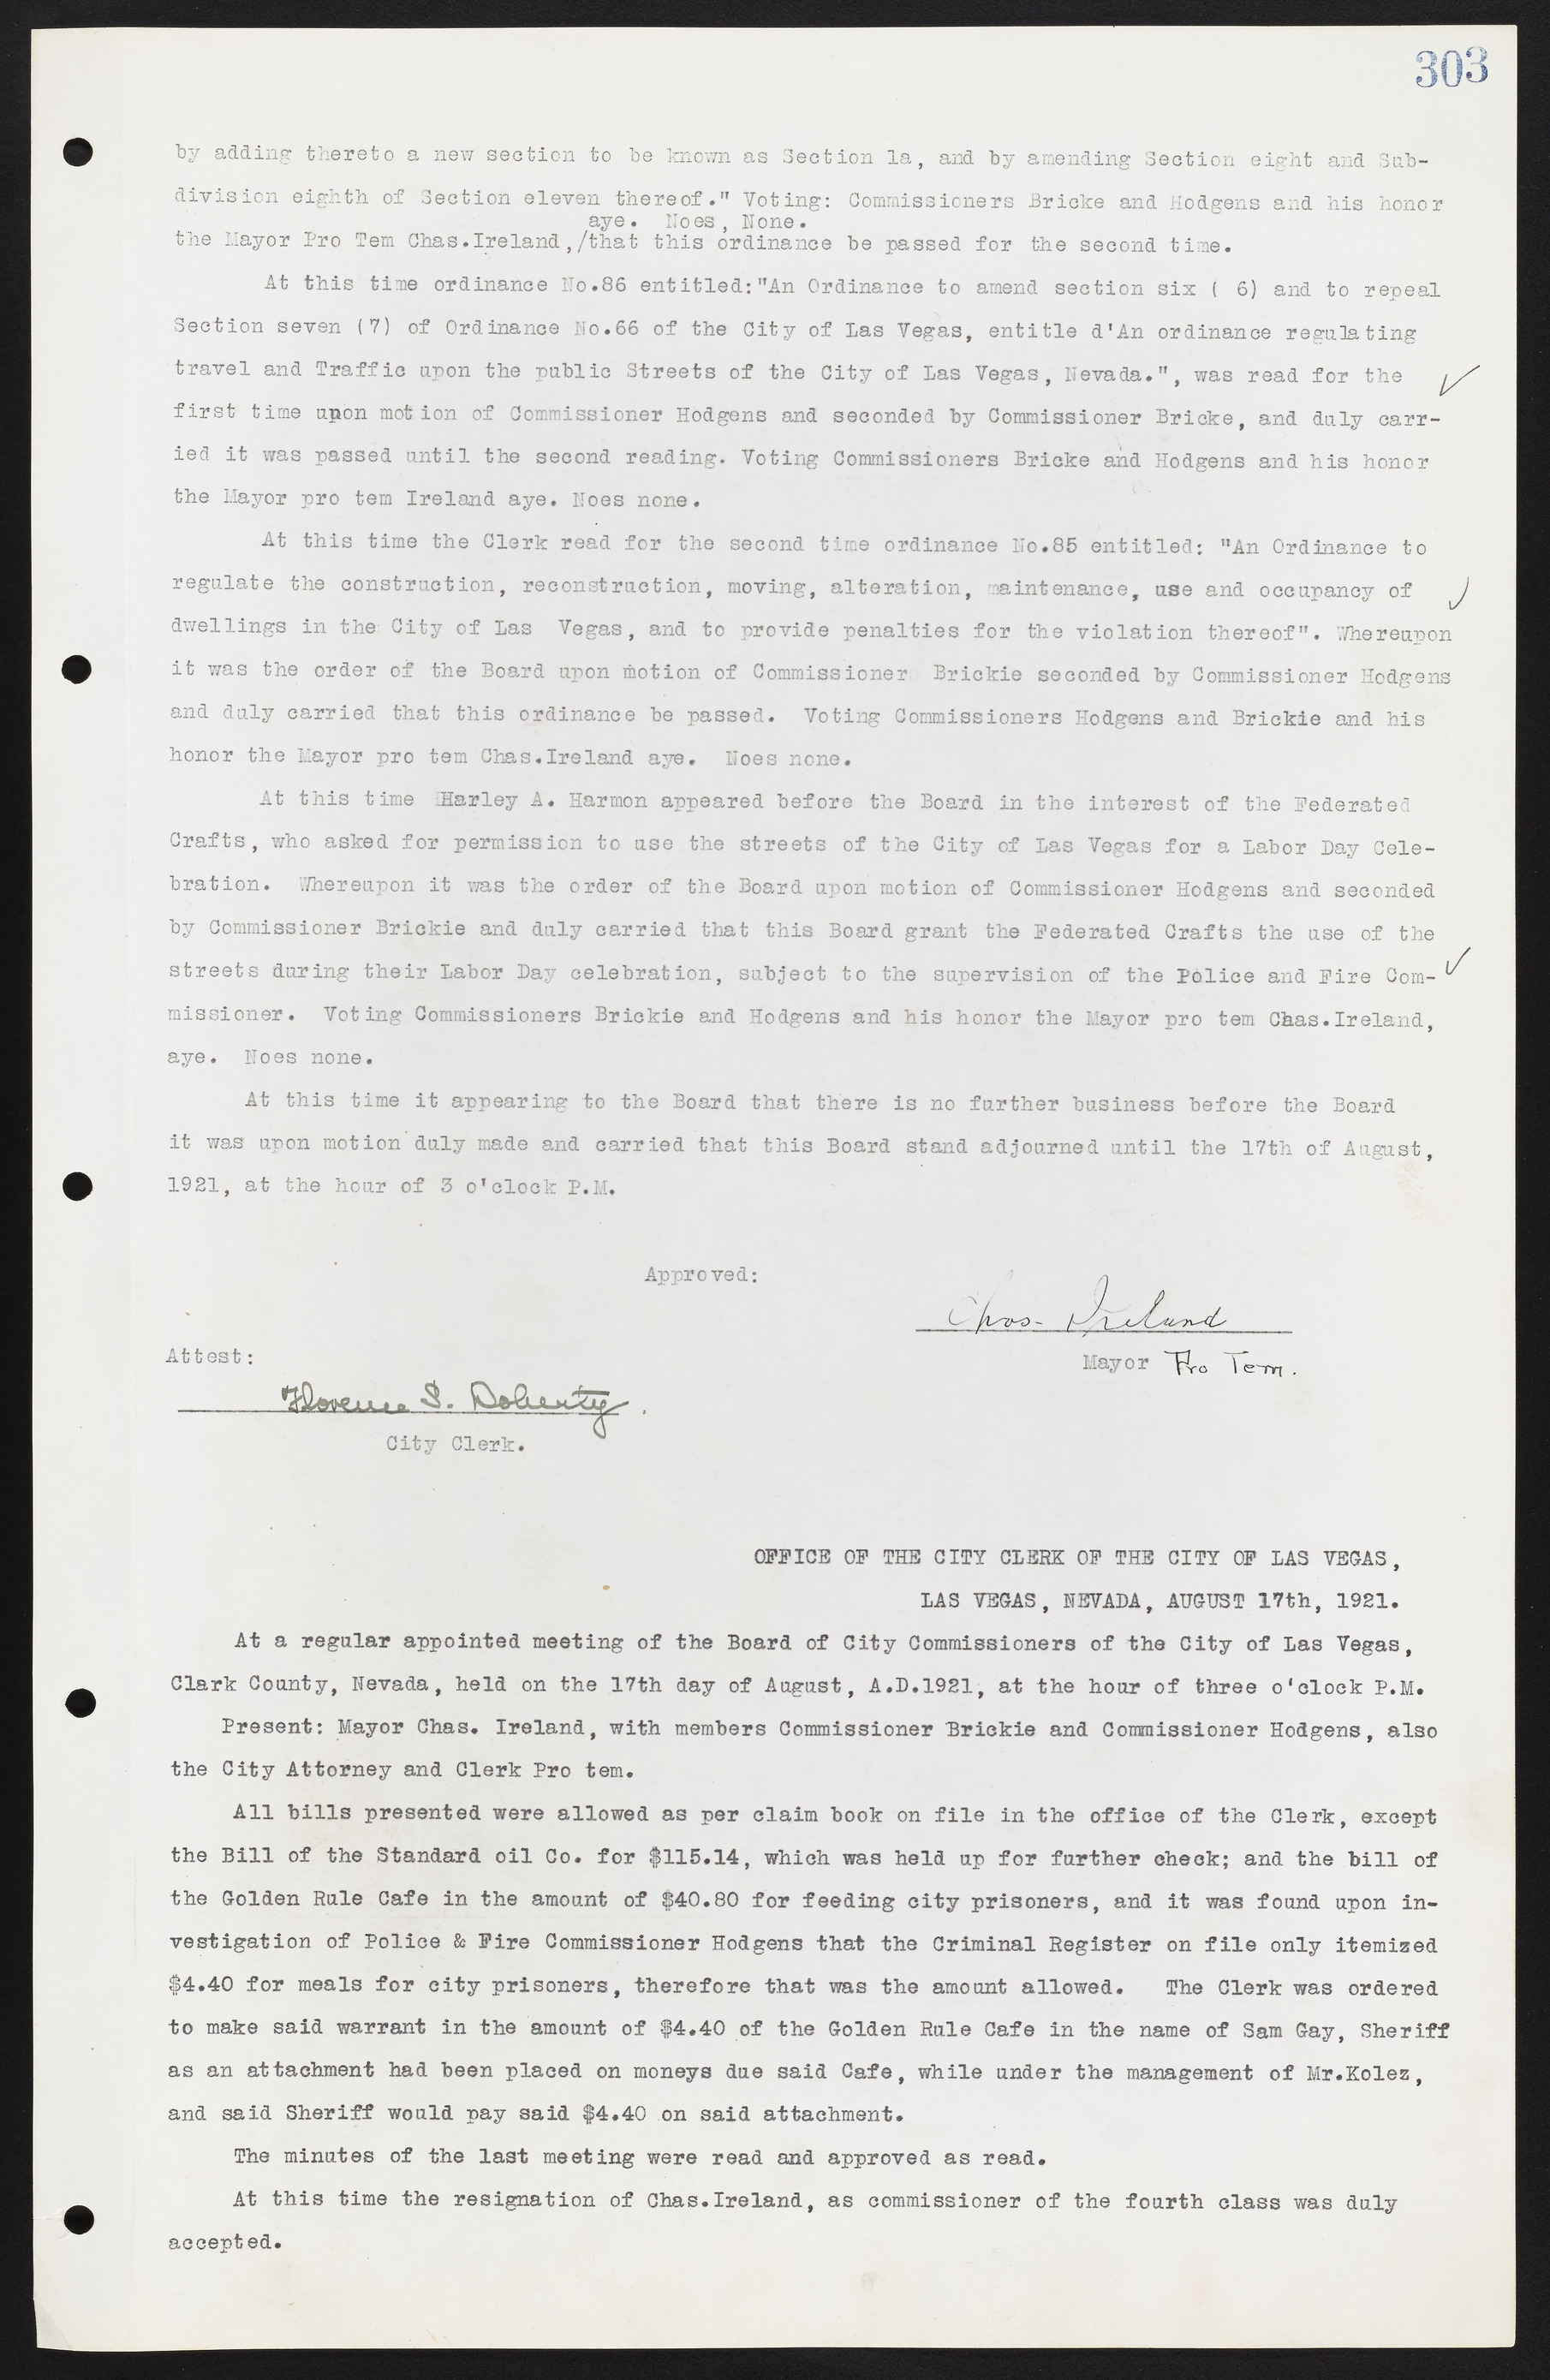 Las Vegas City Commission Minutes, June 22, 1911 to February 7, 1922, lvc000001-319